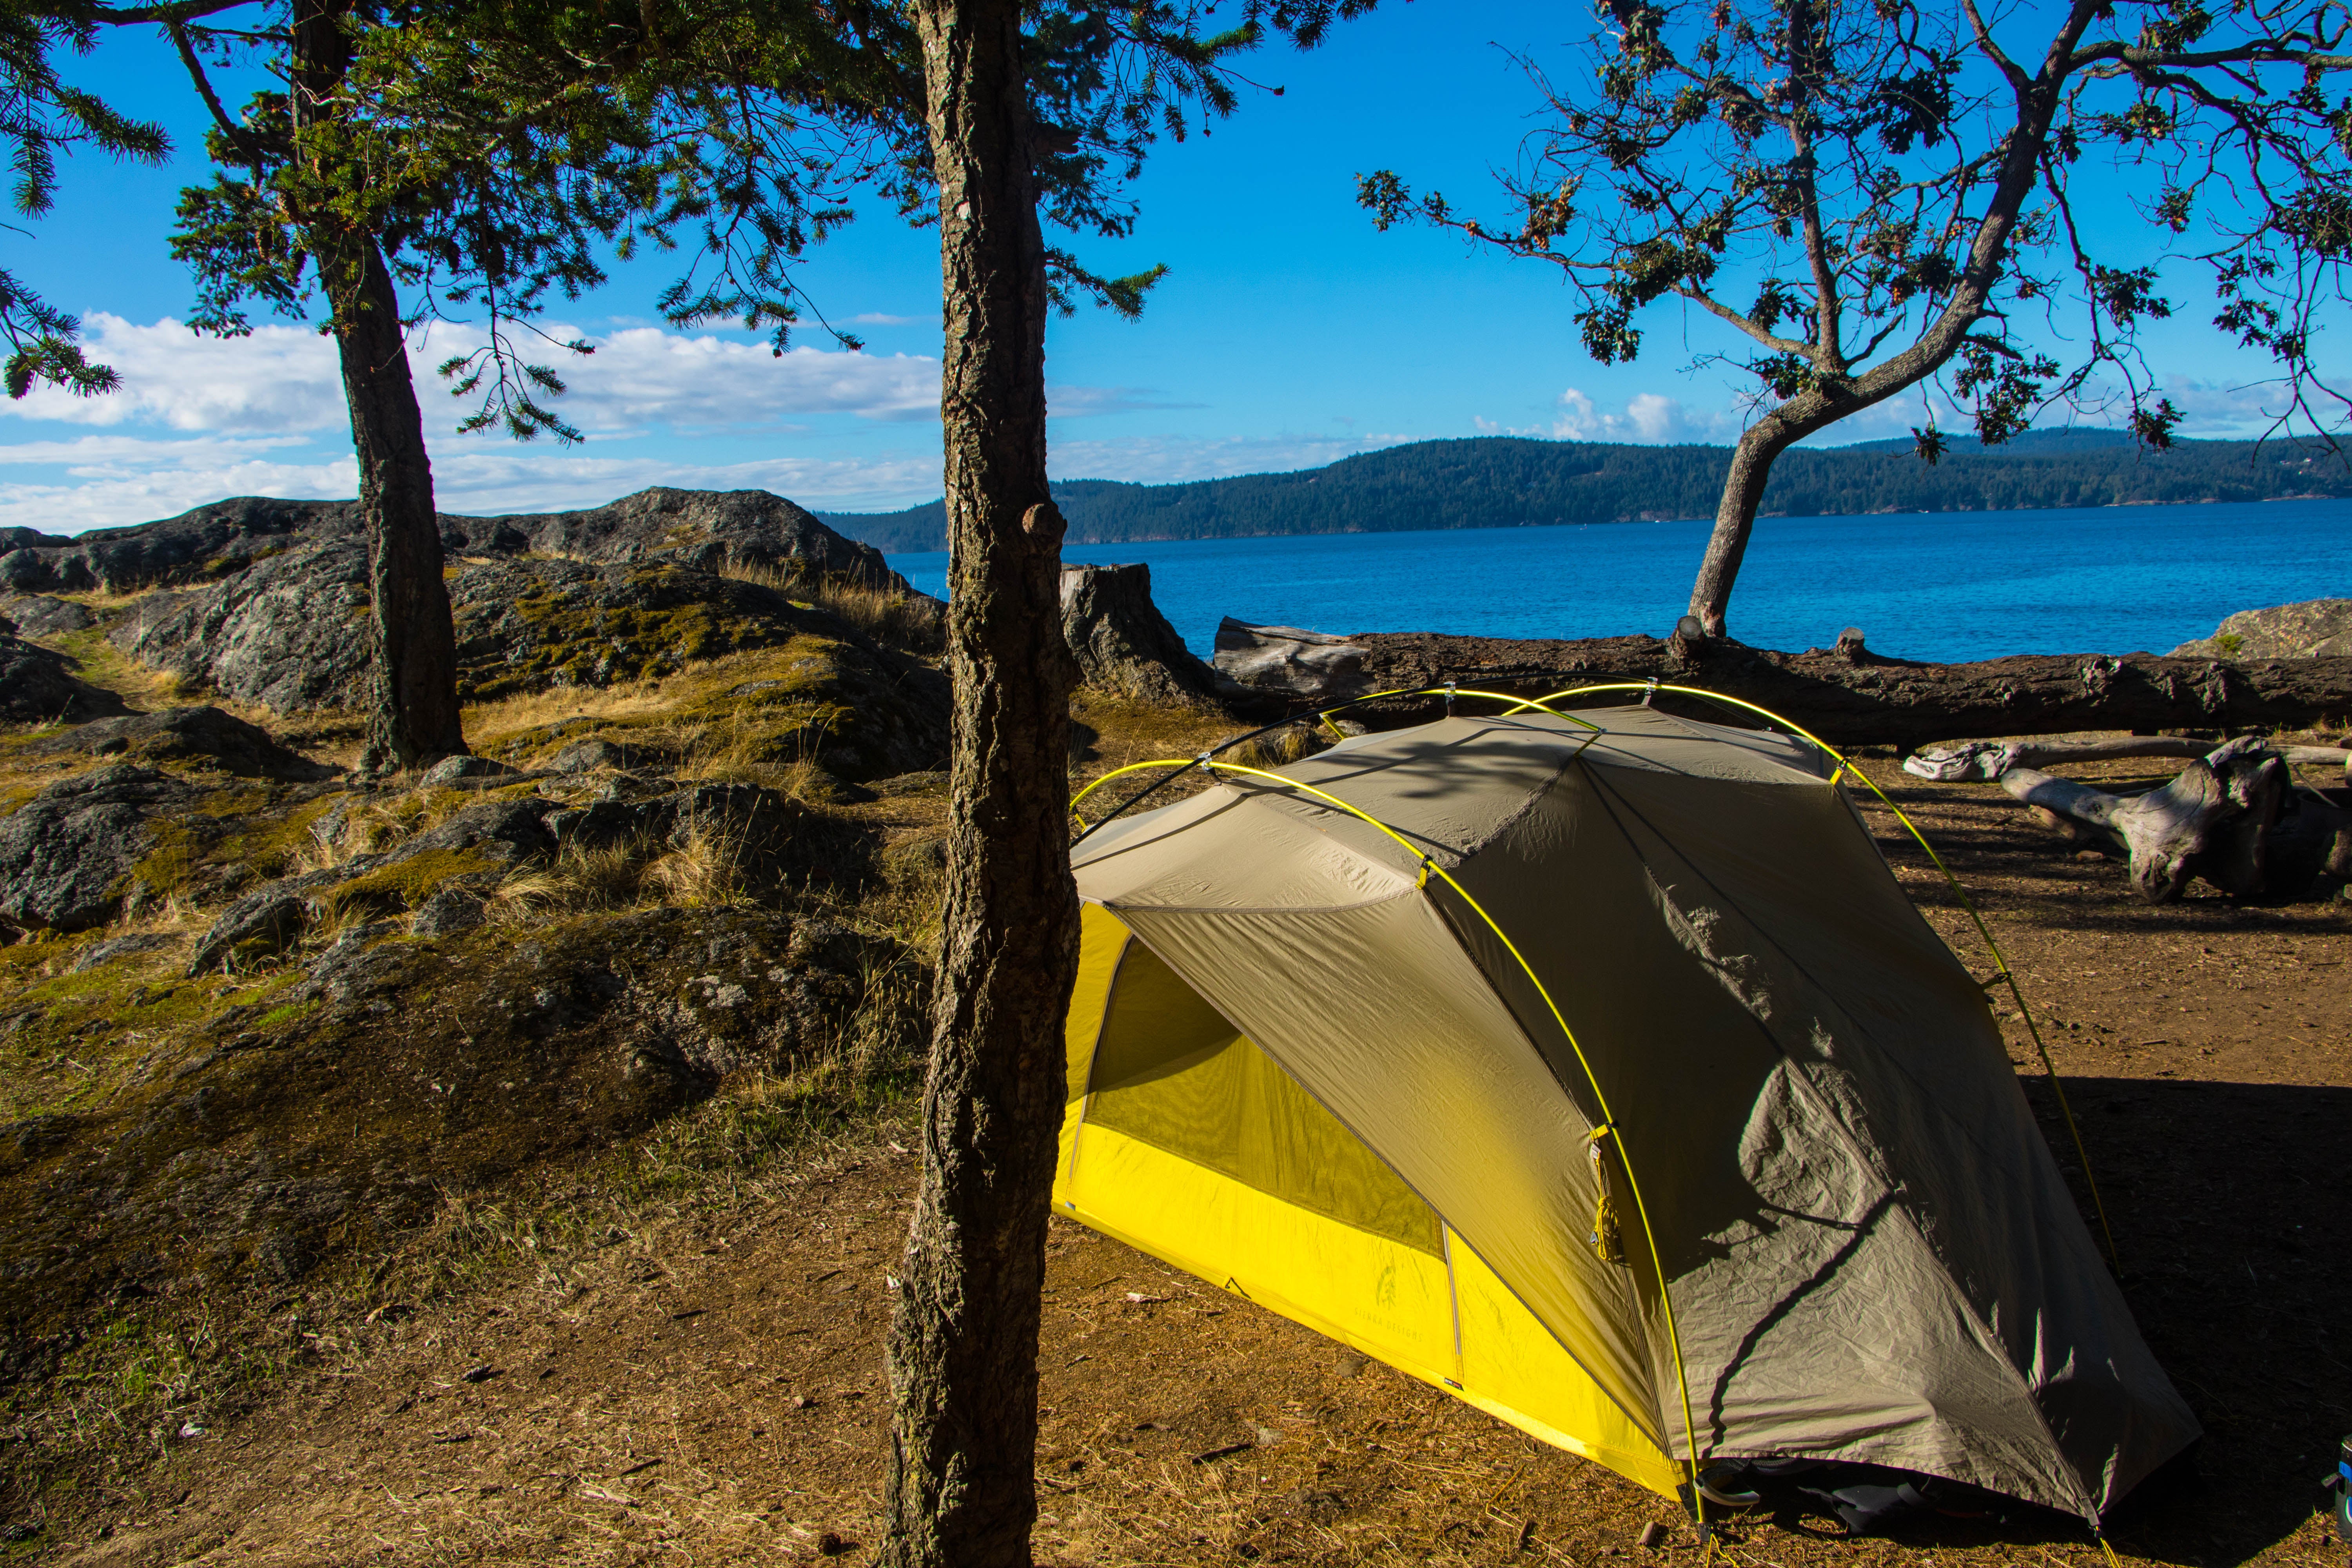 Camping in Mt. Rainier National Park